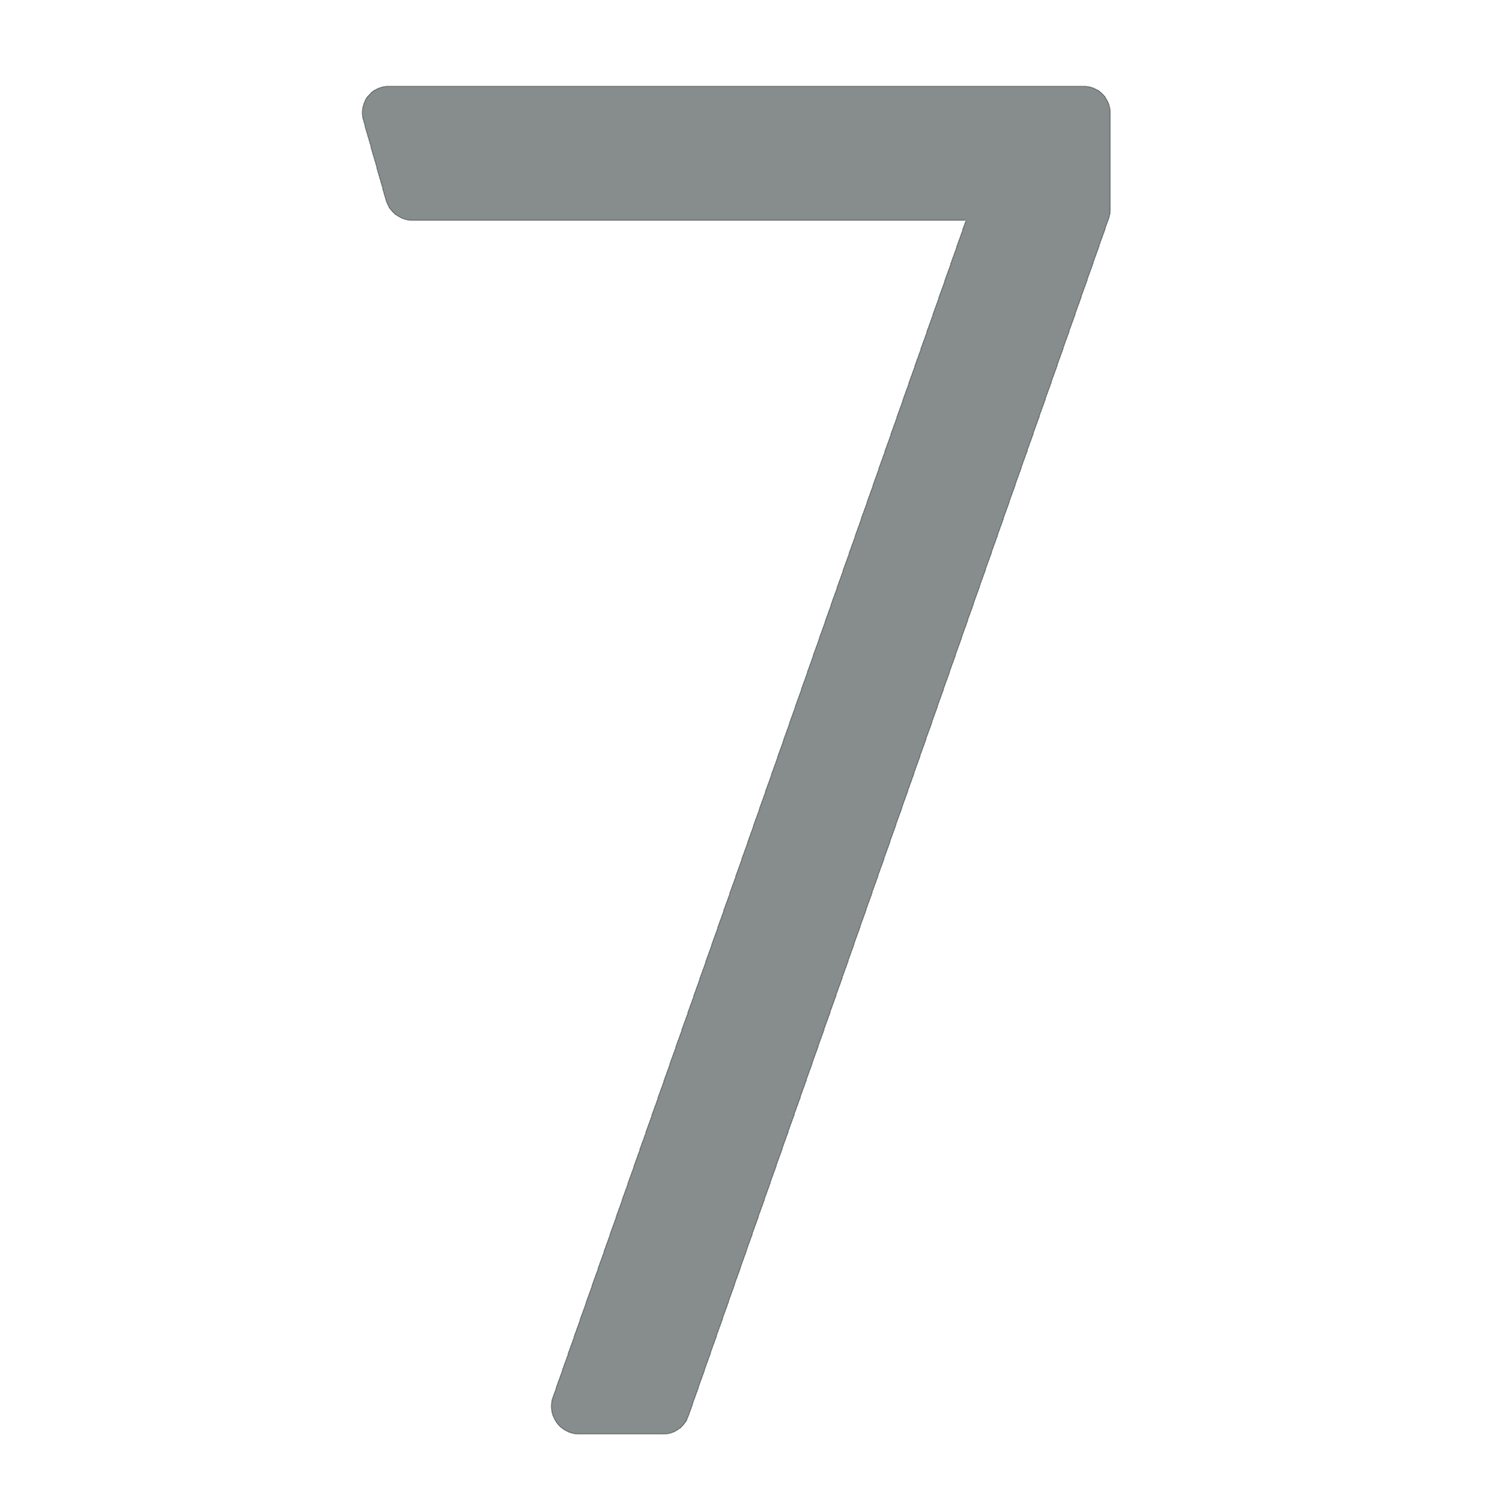 Samoprzylepny numer domu „7” - 152 mm na szary